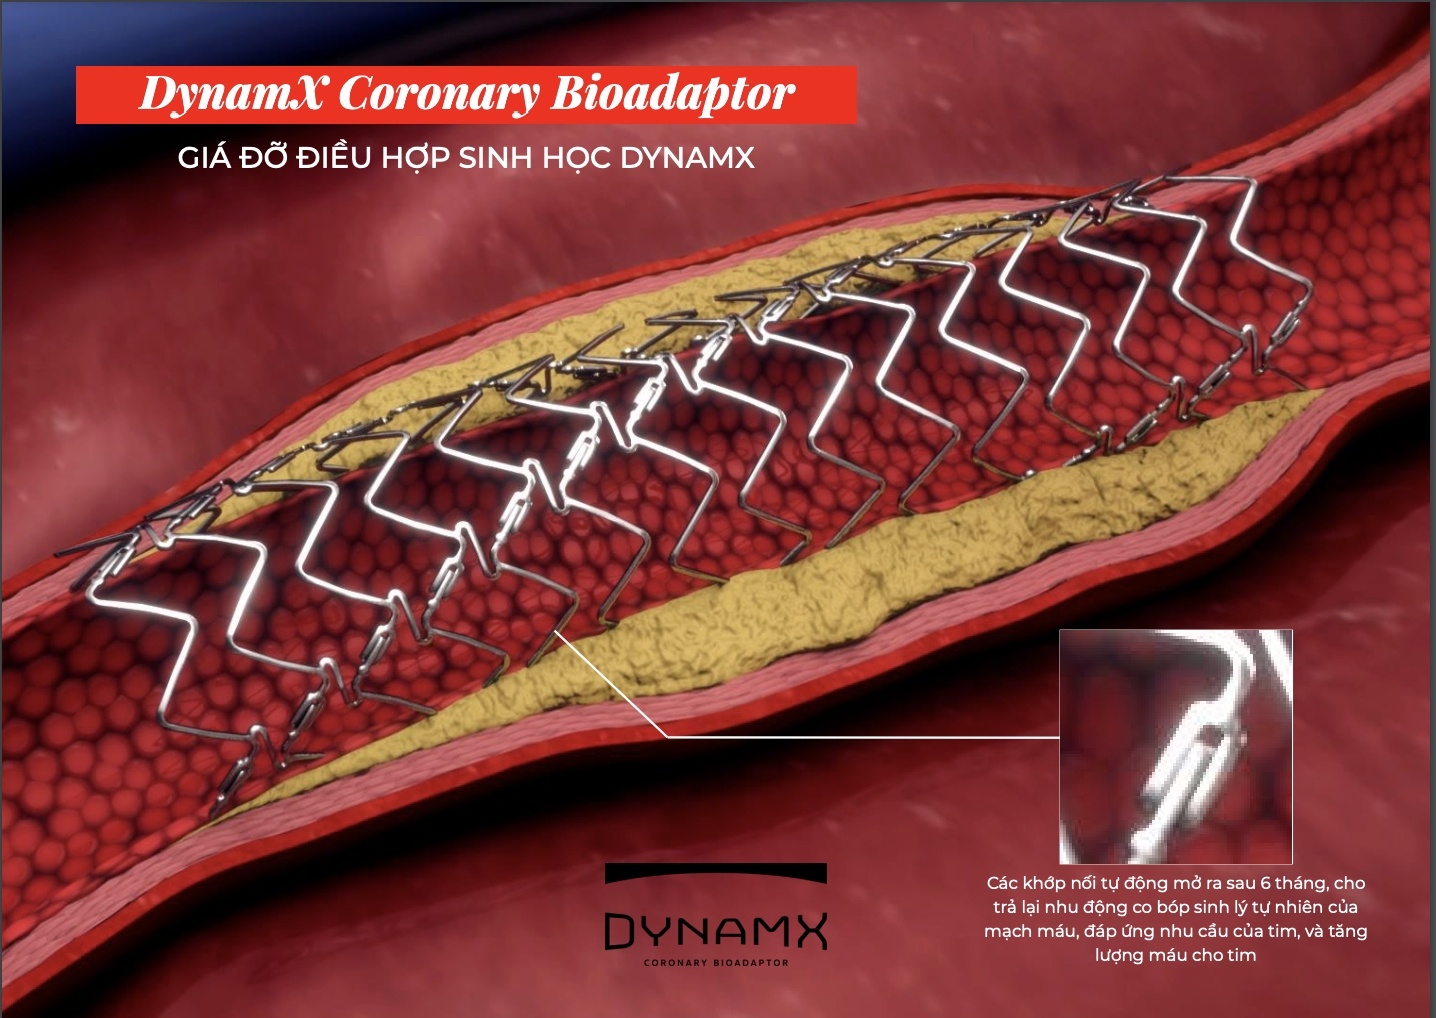 Elixir Medical’s Dynamx Bioadaptor returns strong results